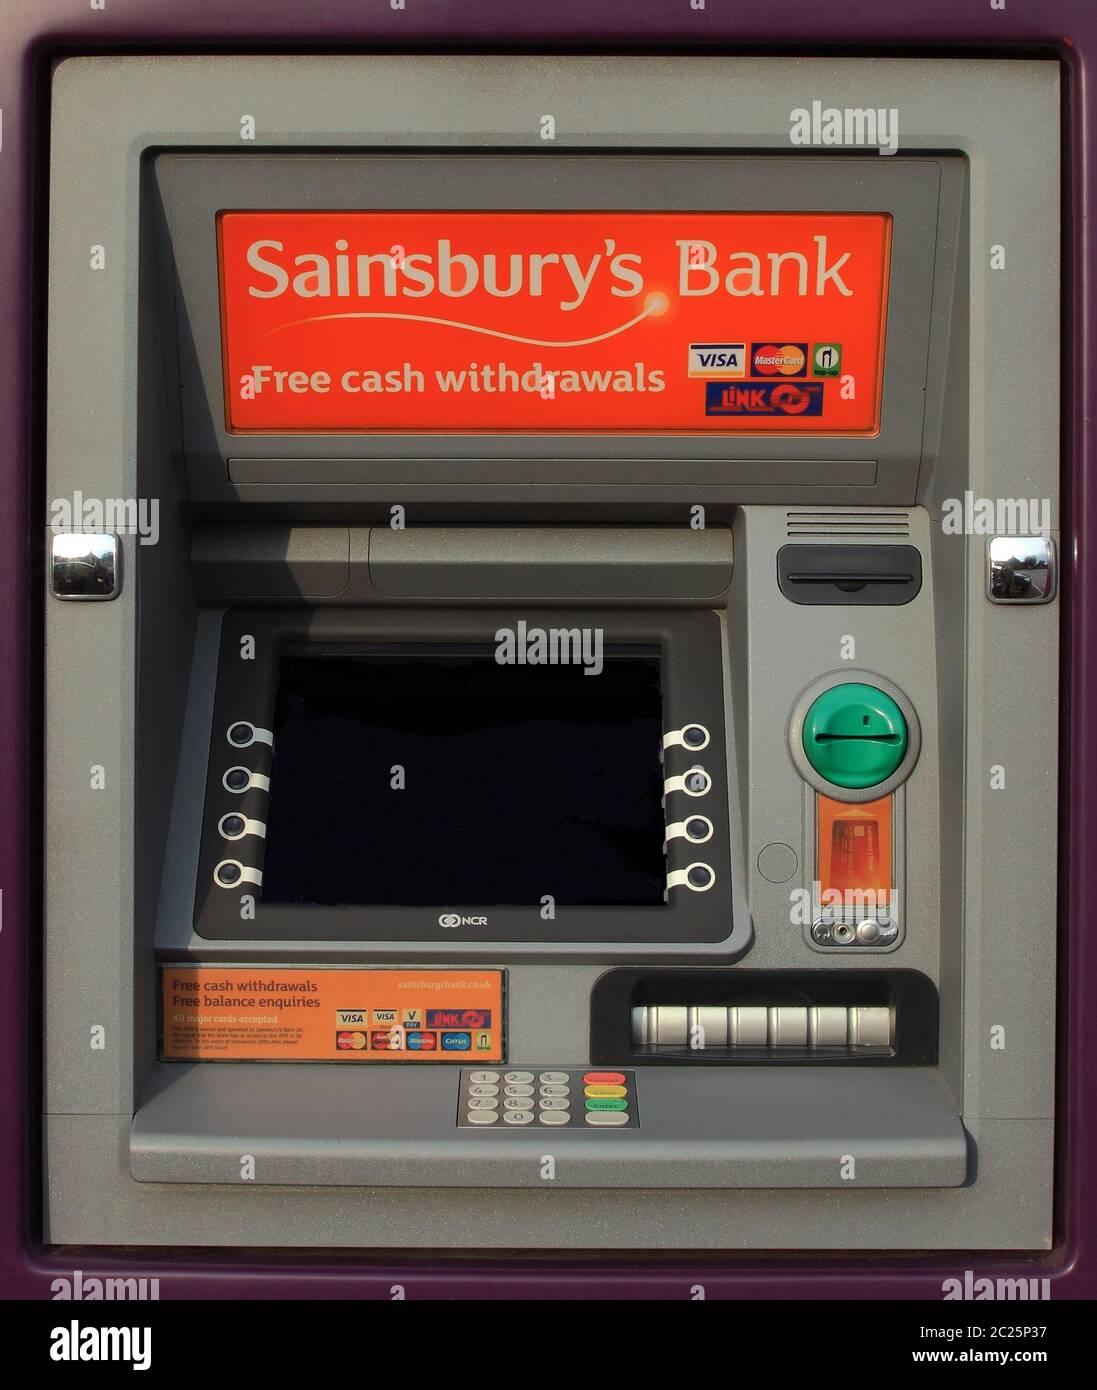 Sainsbury's Bank, máquina Cashpoint, cajero automático, Inglaterra, Reino Unido, Inglés, punto de efectivo, efectivo instantáneo Foto de stock